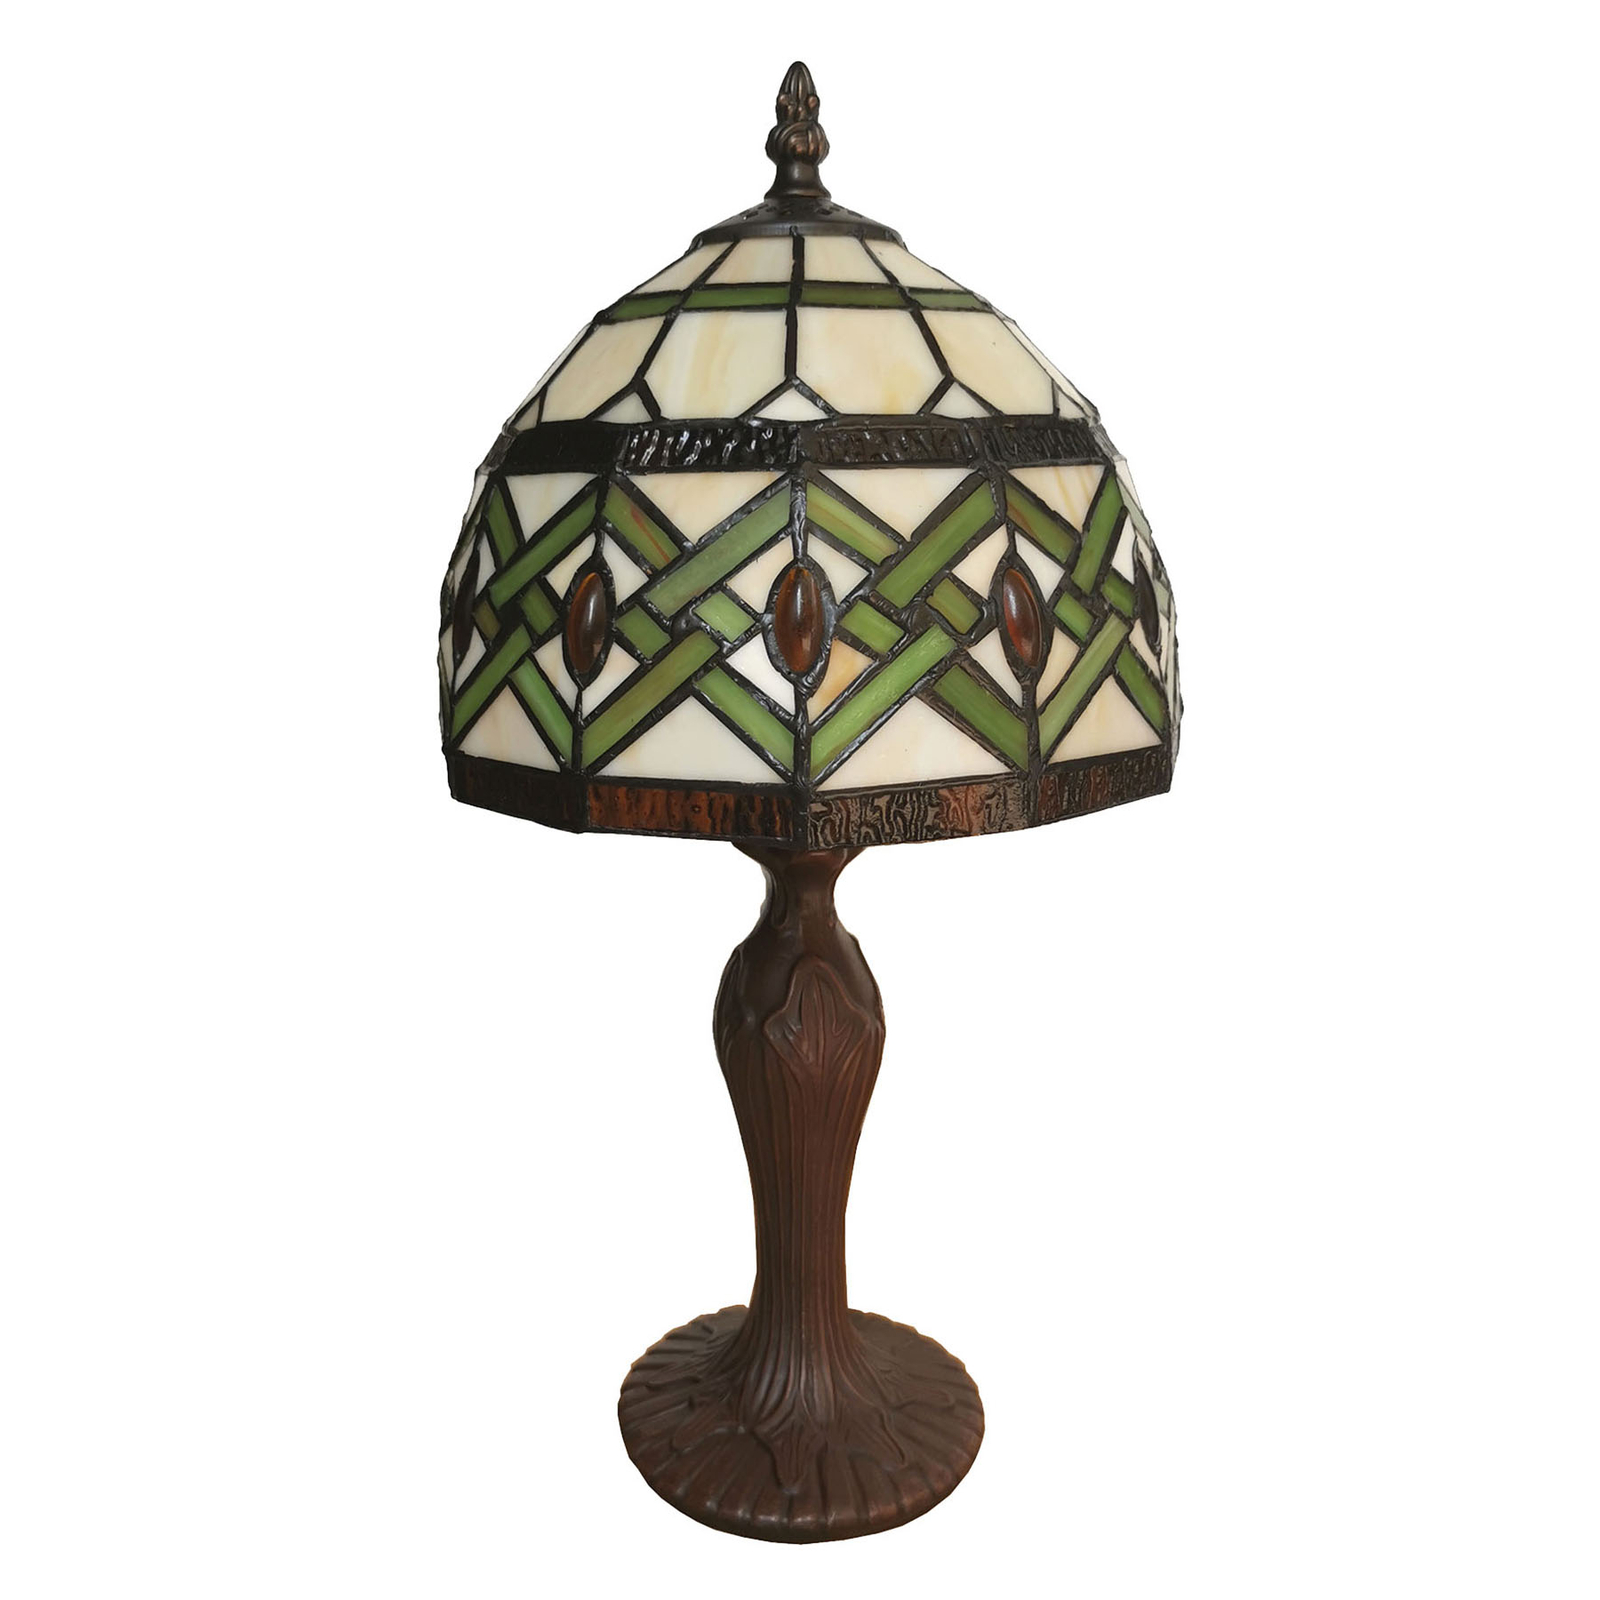 Tafellamp 6027 met glazen kap in Tiffany-design